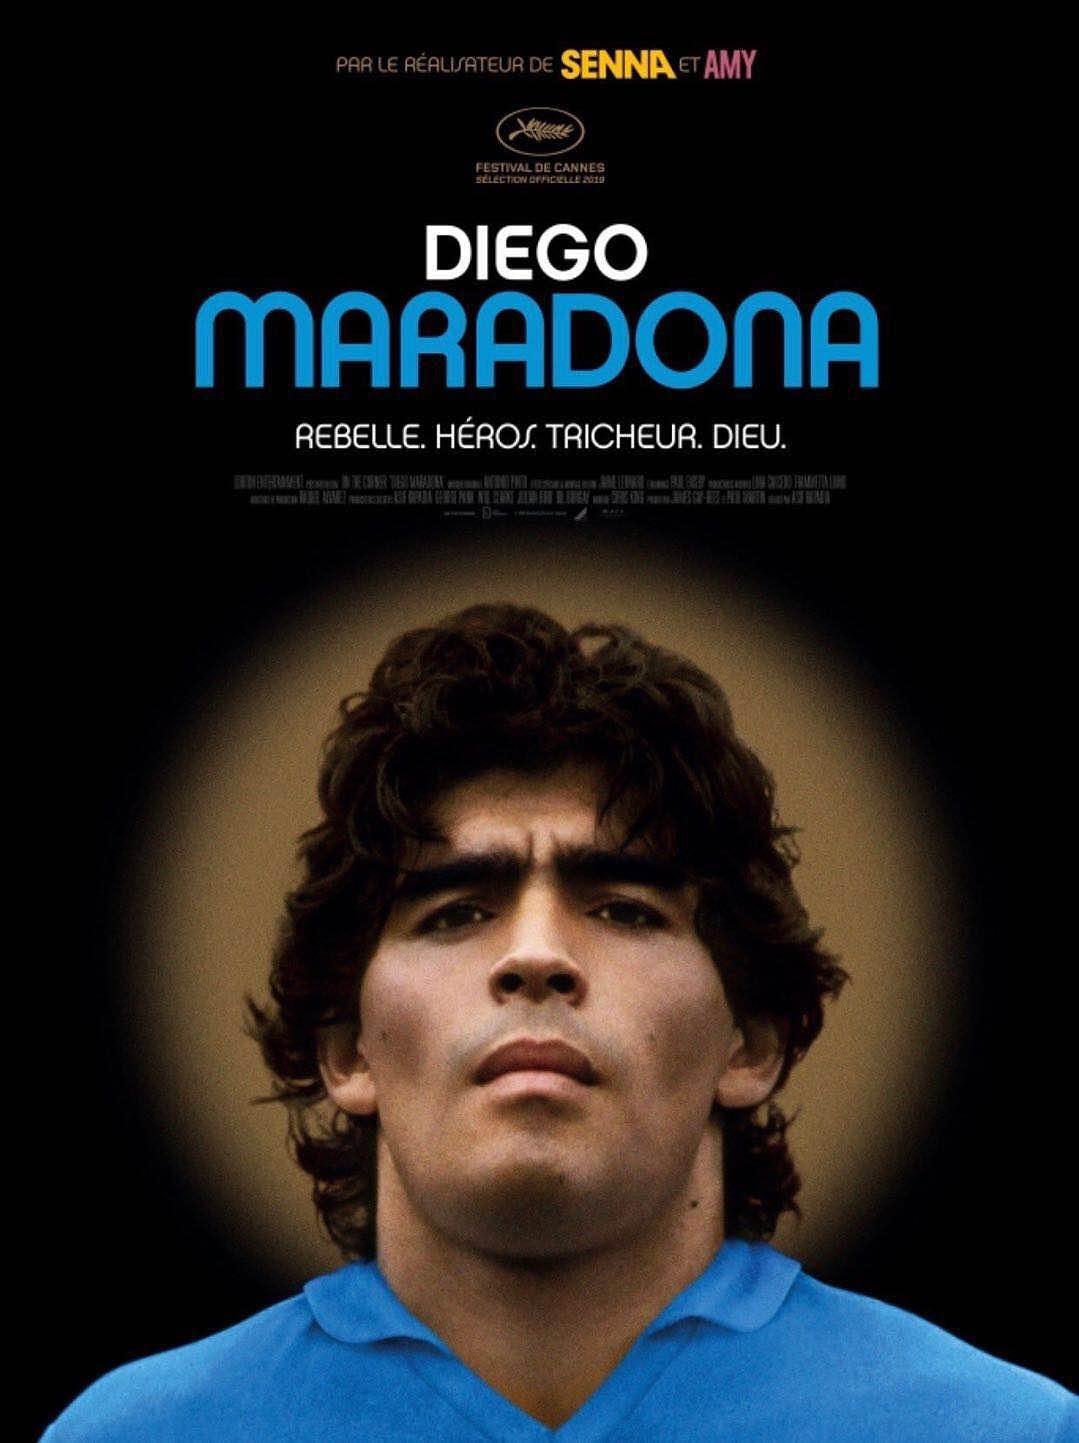  Diego.Maradona.2019.SUBBED.1080p.BluRay.x264-CADAVER 8.74GB-1.png